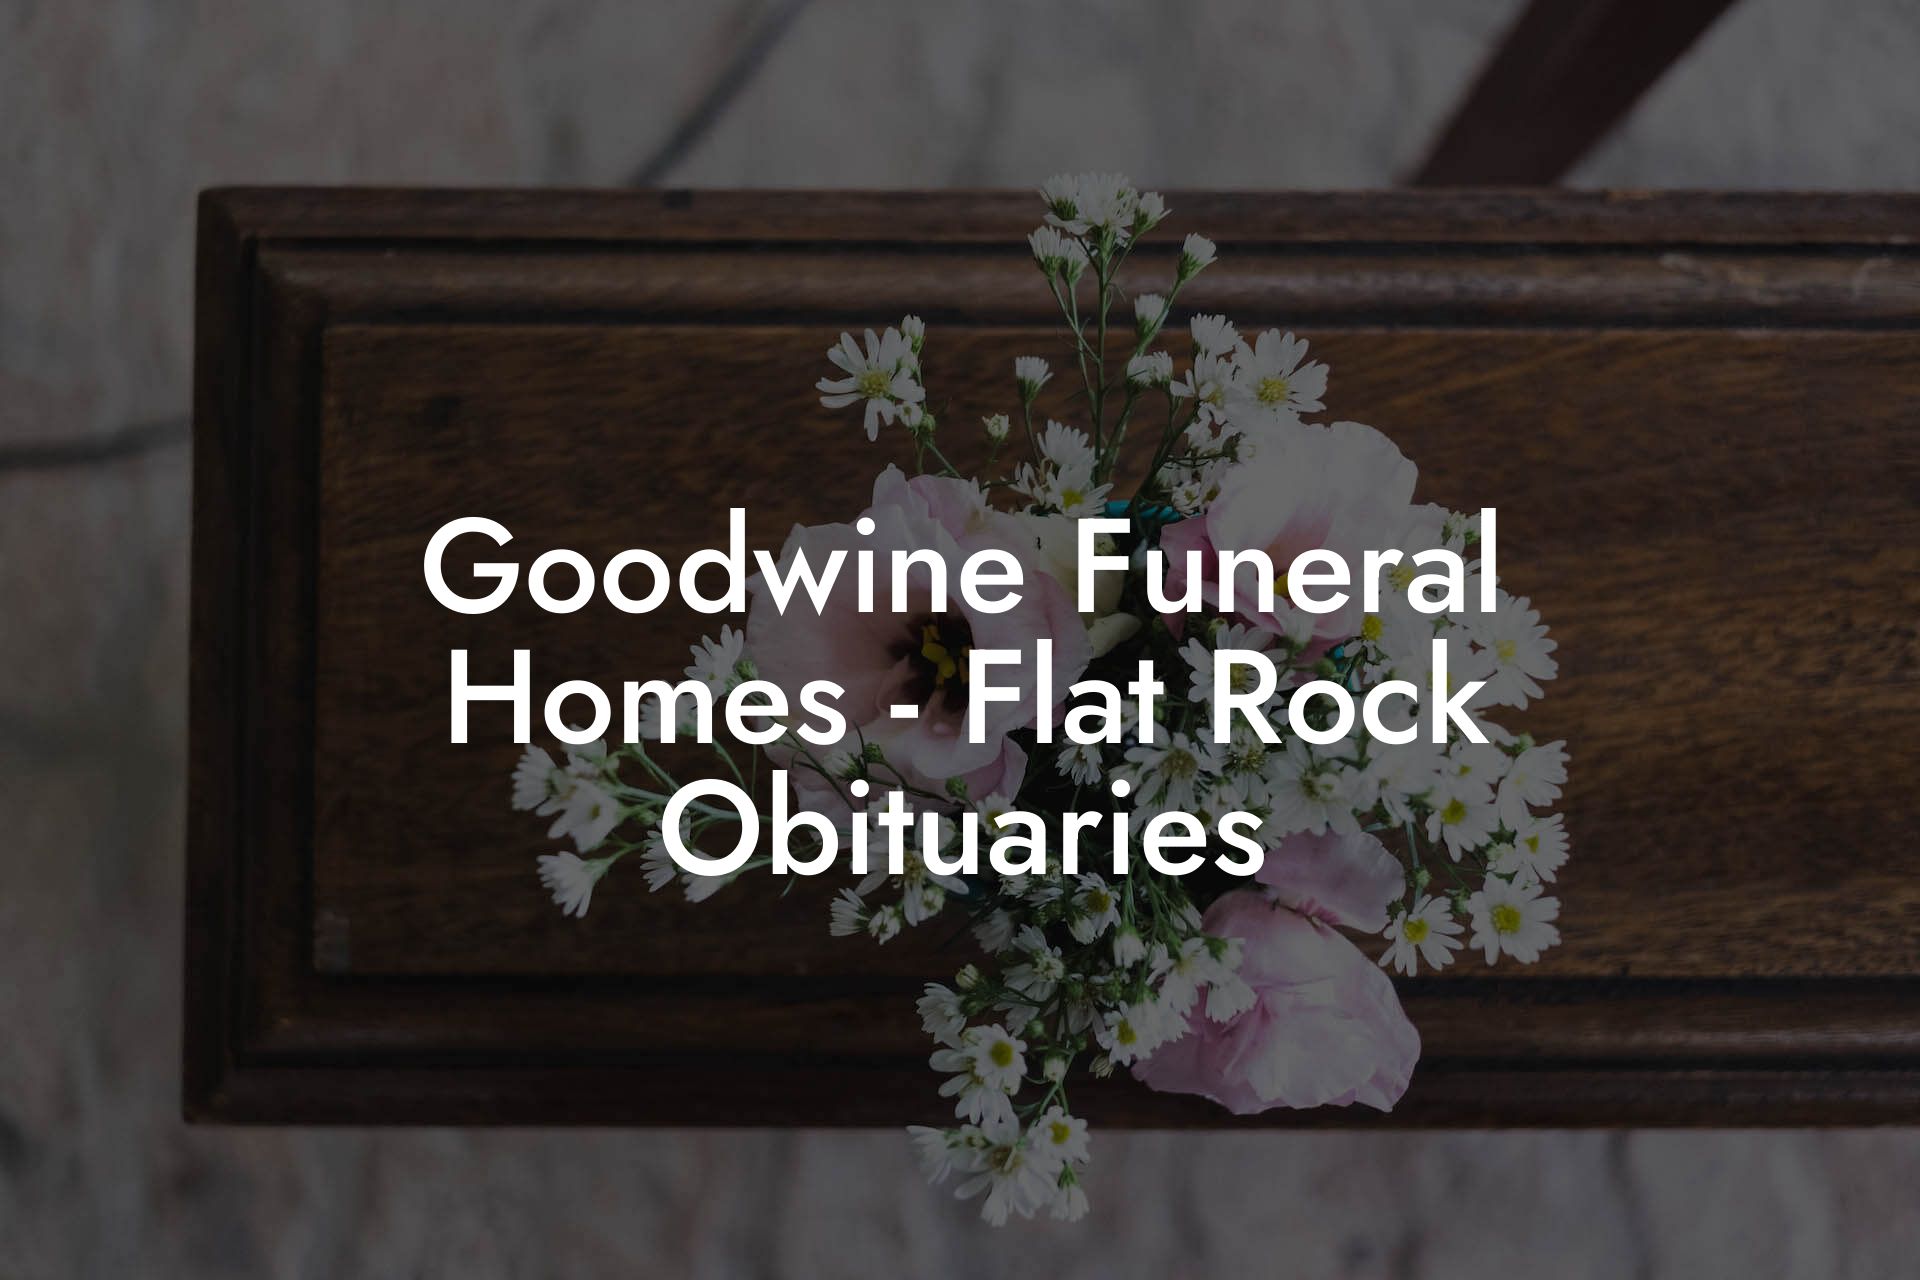 Goodwine Funeral Homes - Flat Rock Obituaries